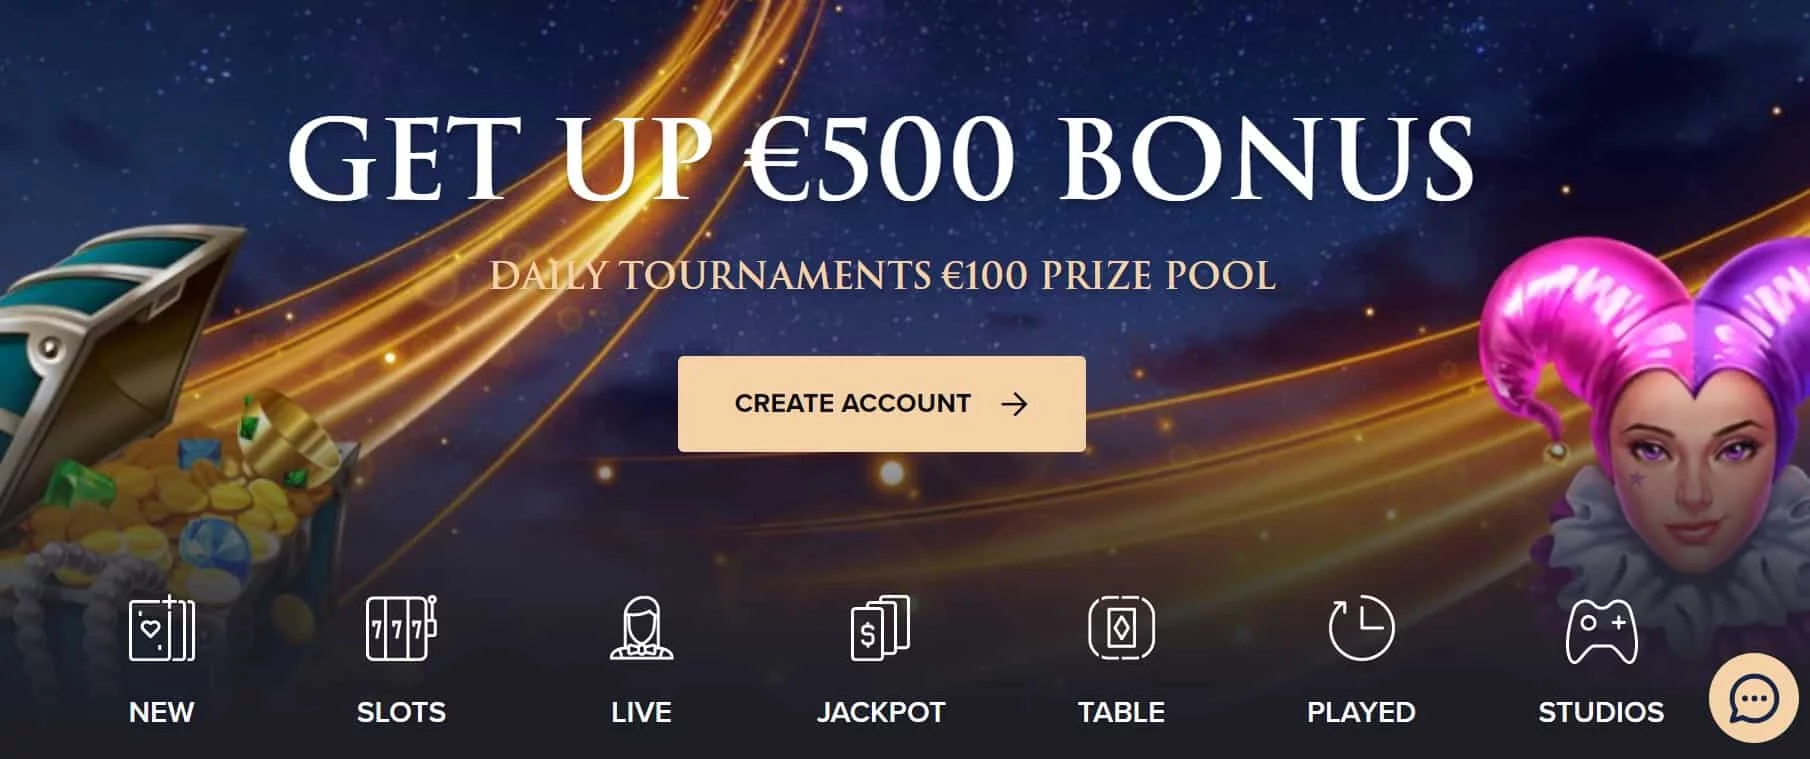 casino rex up to 5000 bonus-min